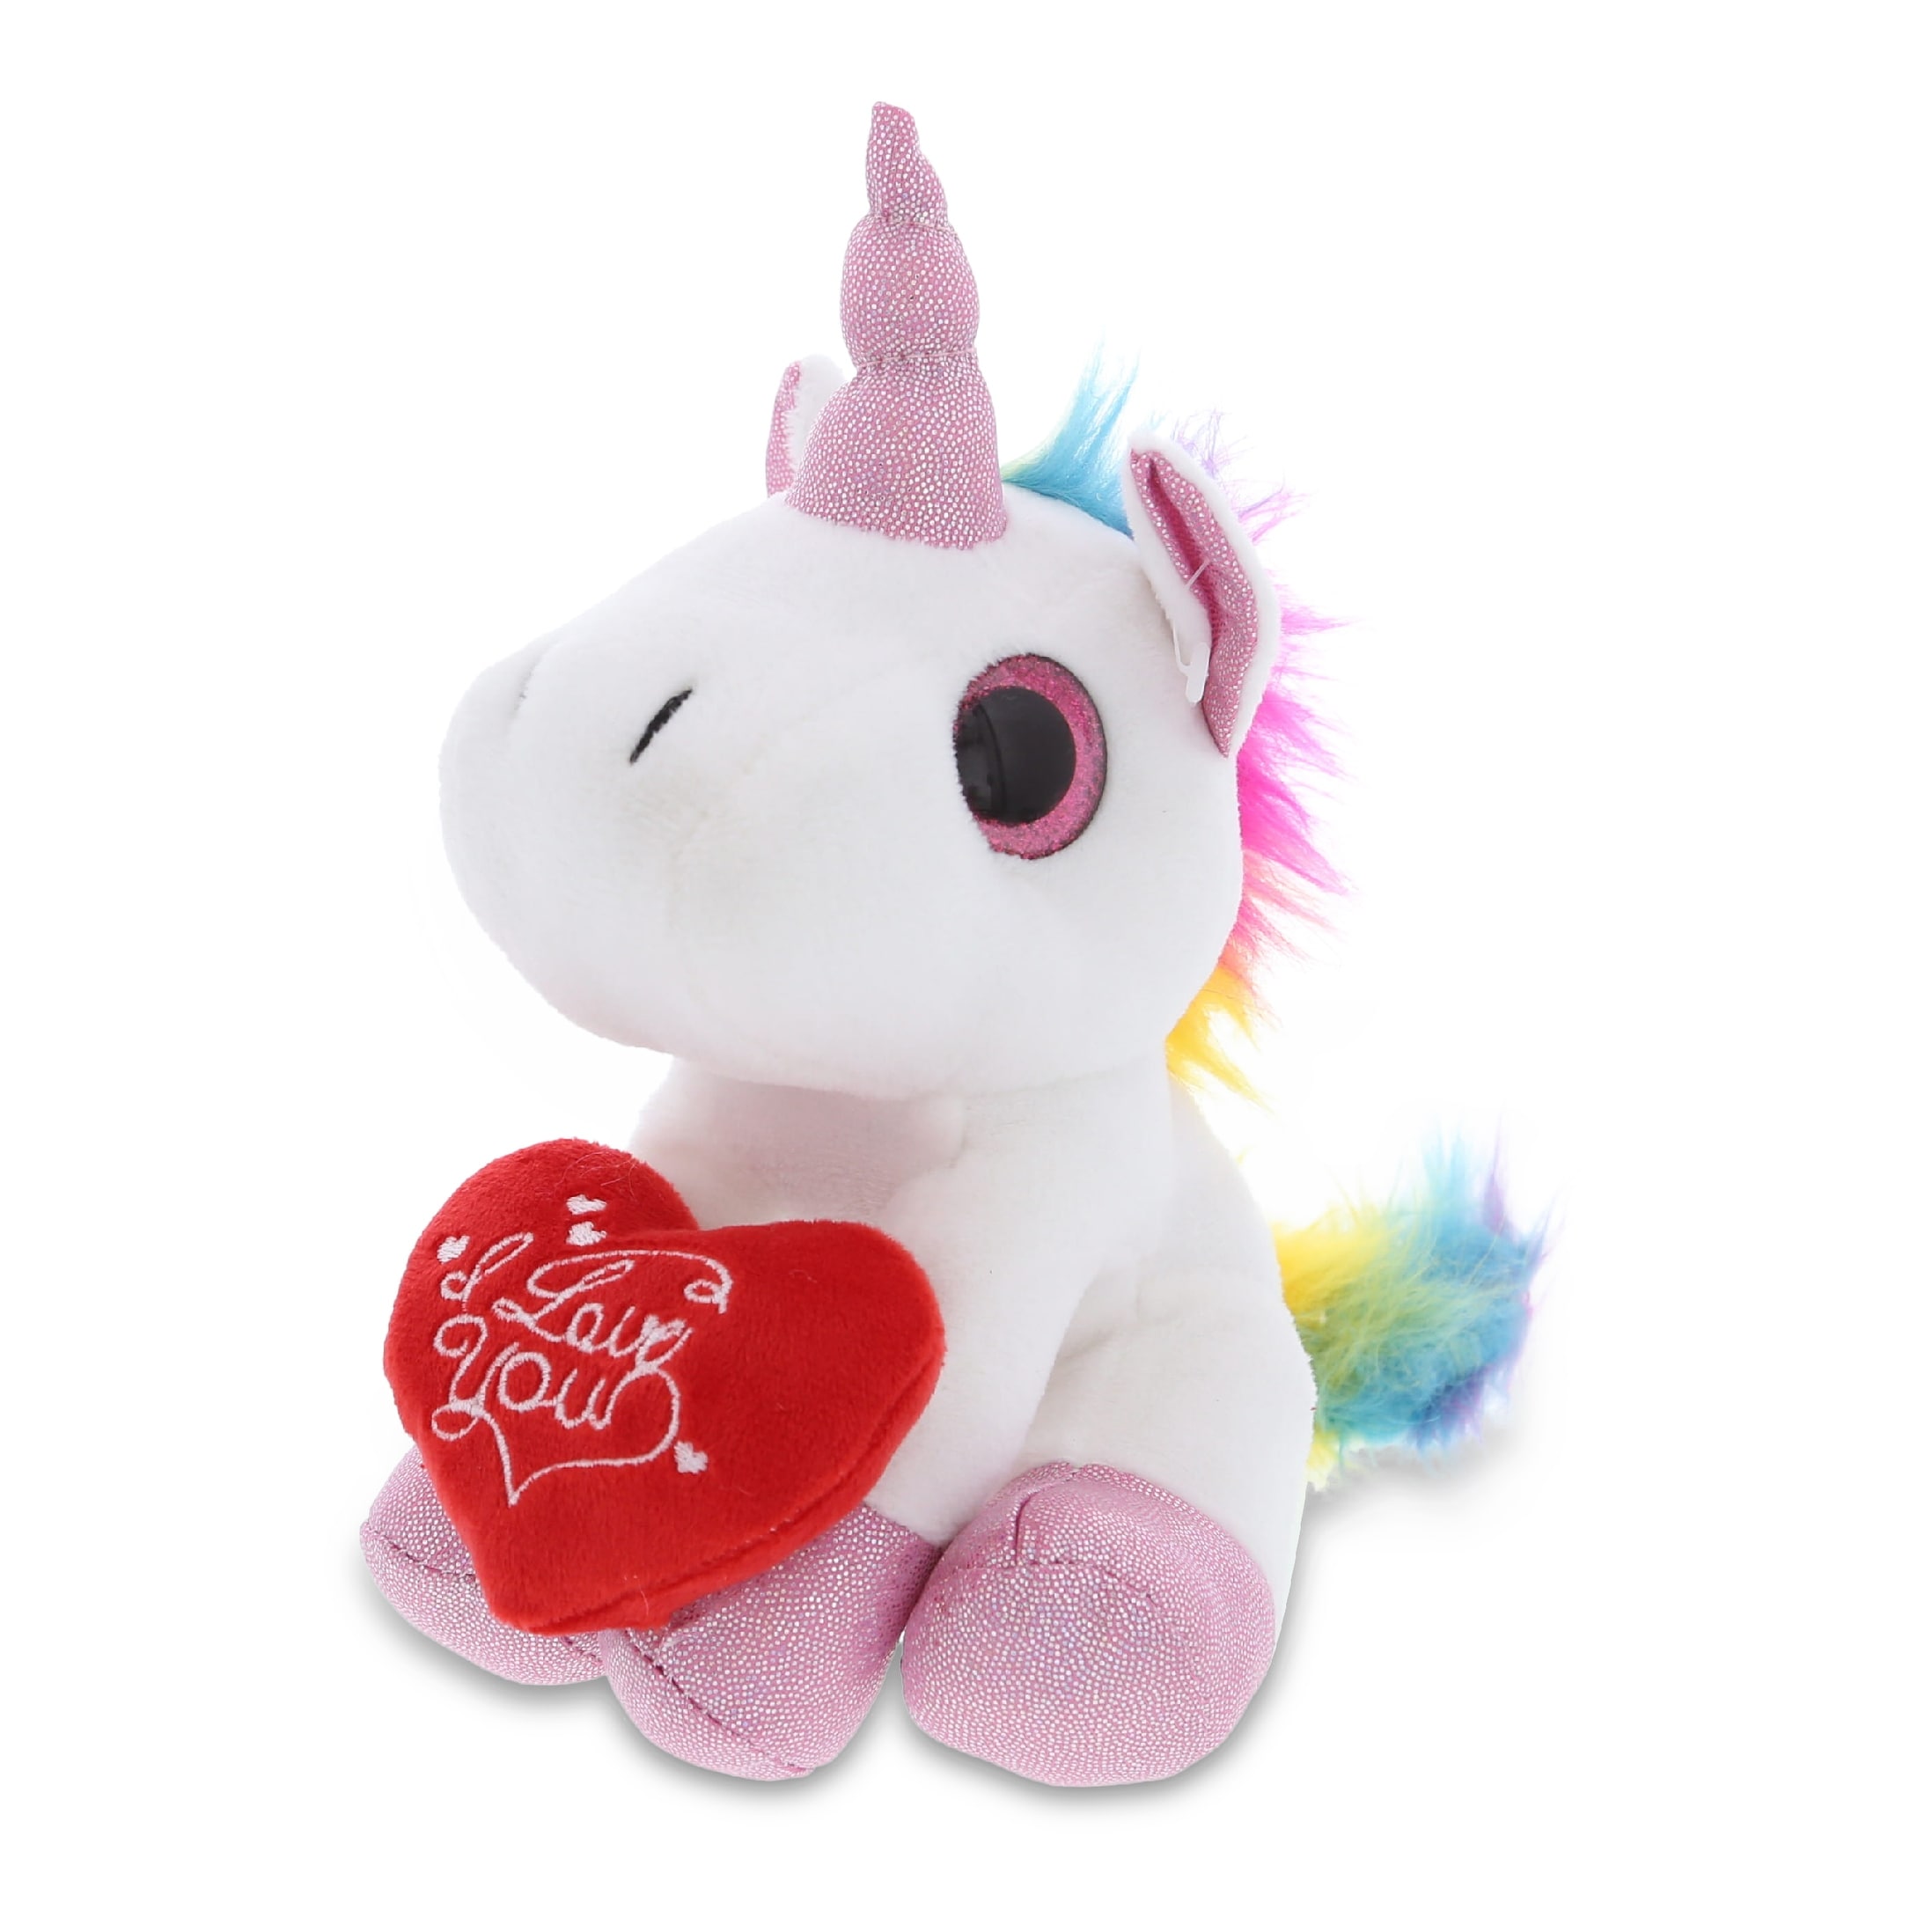 DolliBu I LOVE YOU Plush Sparkling Big Eye White Unicorn Animal with Heart - 7 Inches - Polyester